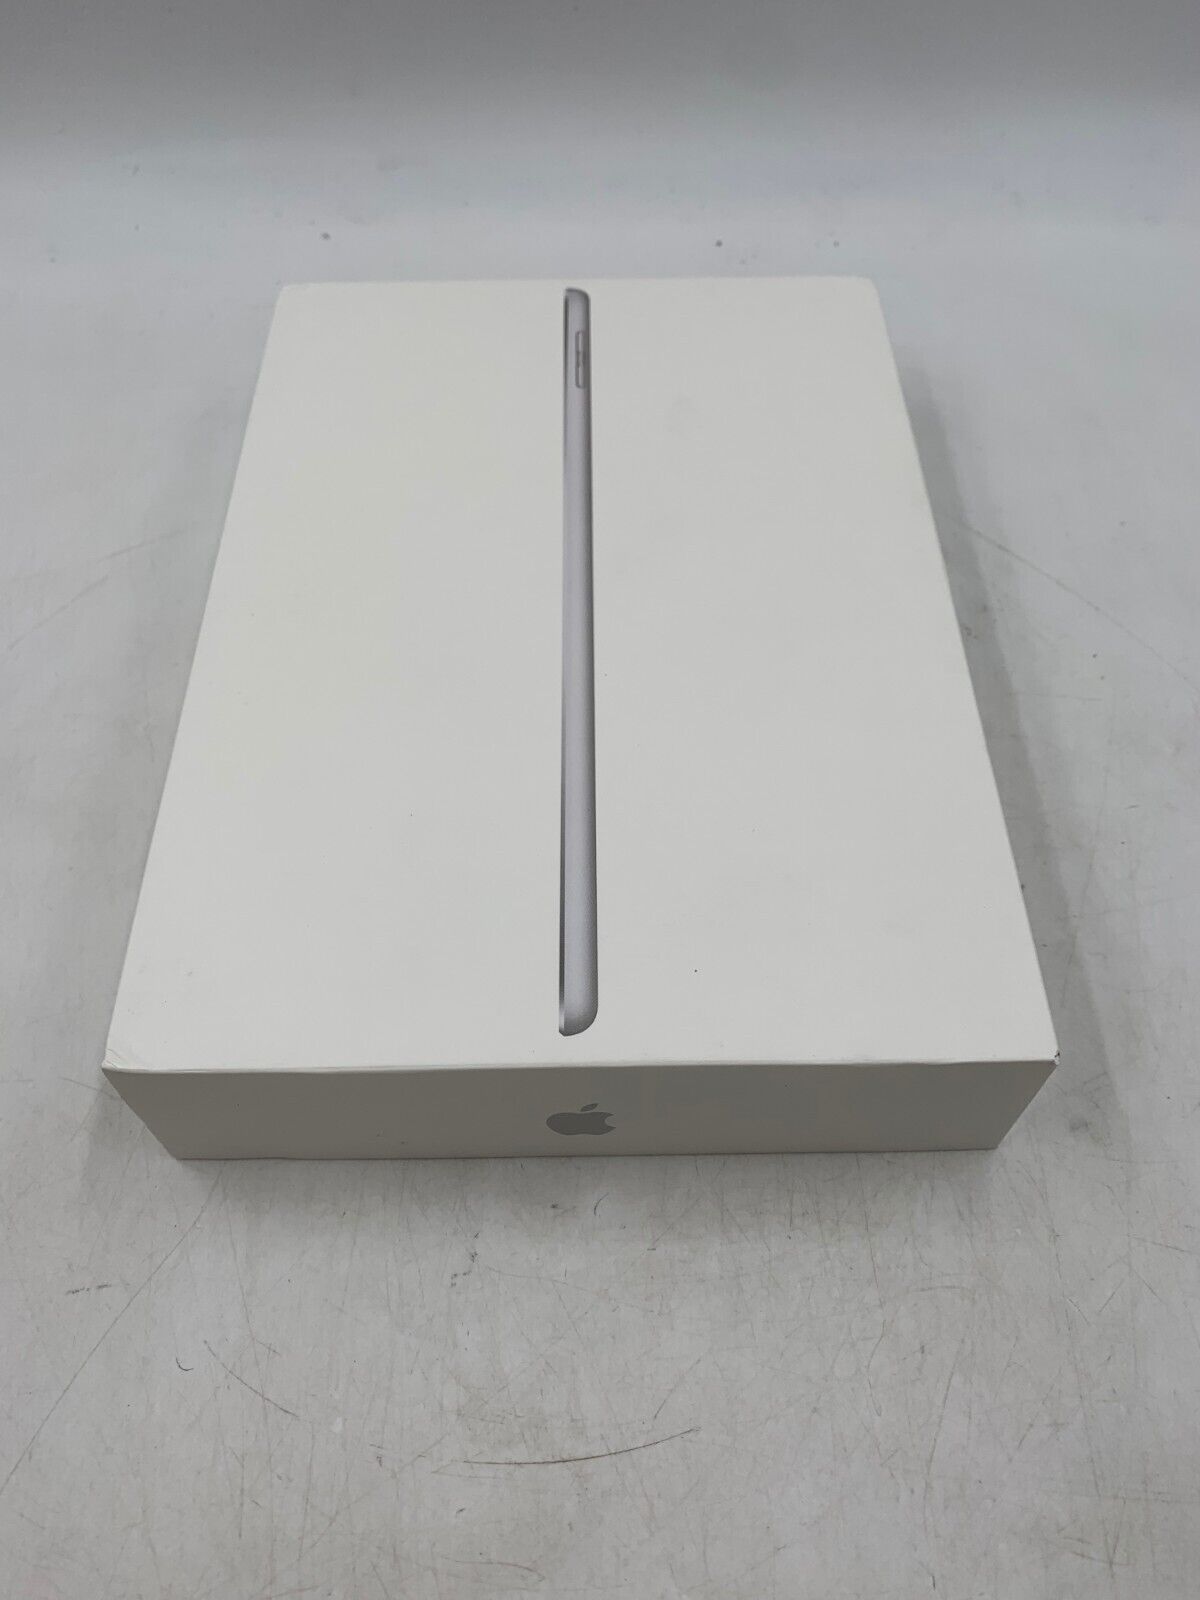 Apple iPad 6th Generation Wi-Fi 32GB Silver EMPTY BOX ONLY MR7G2LL/A Free S/H